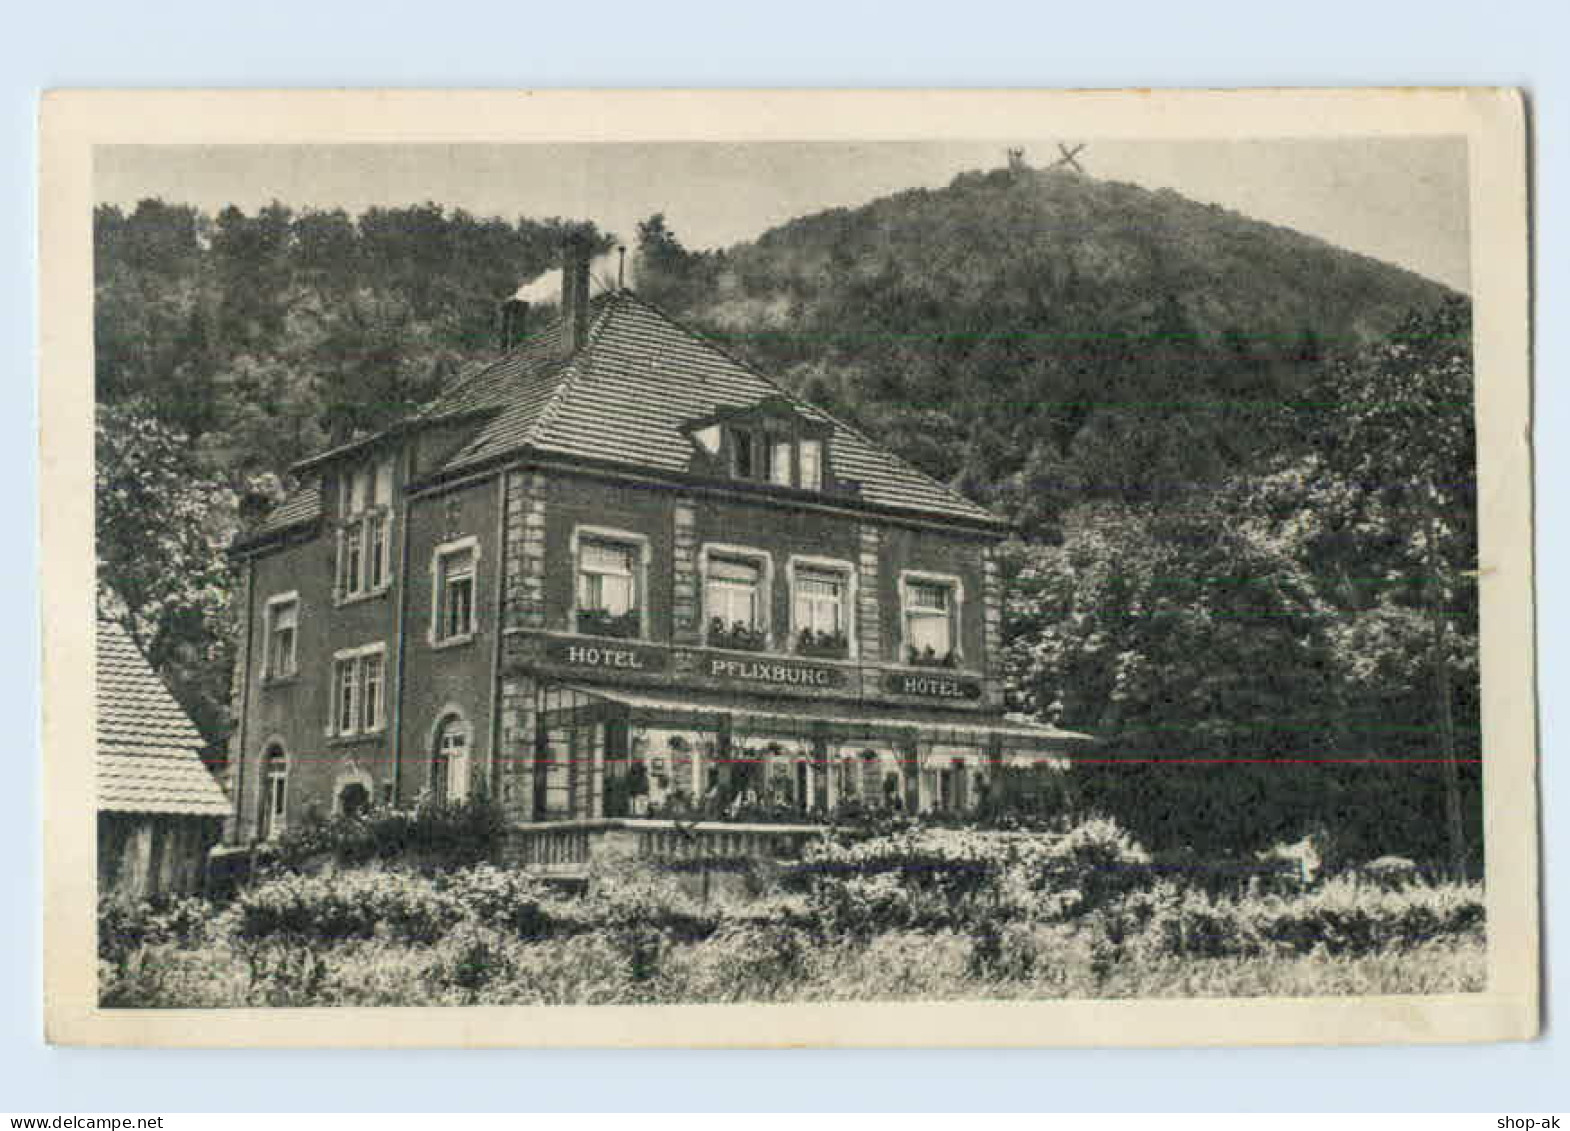 N1910/ St. Gilgen Im Elsass Alsace Frankreich France Hotel Pflixburg AK 1943 - Elsass